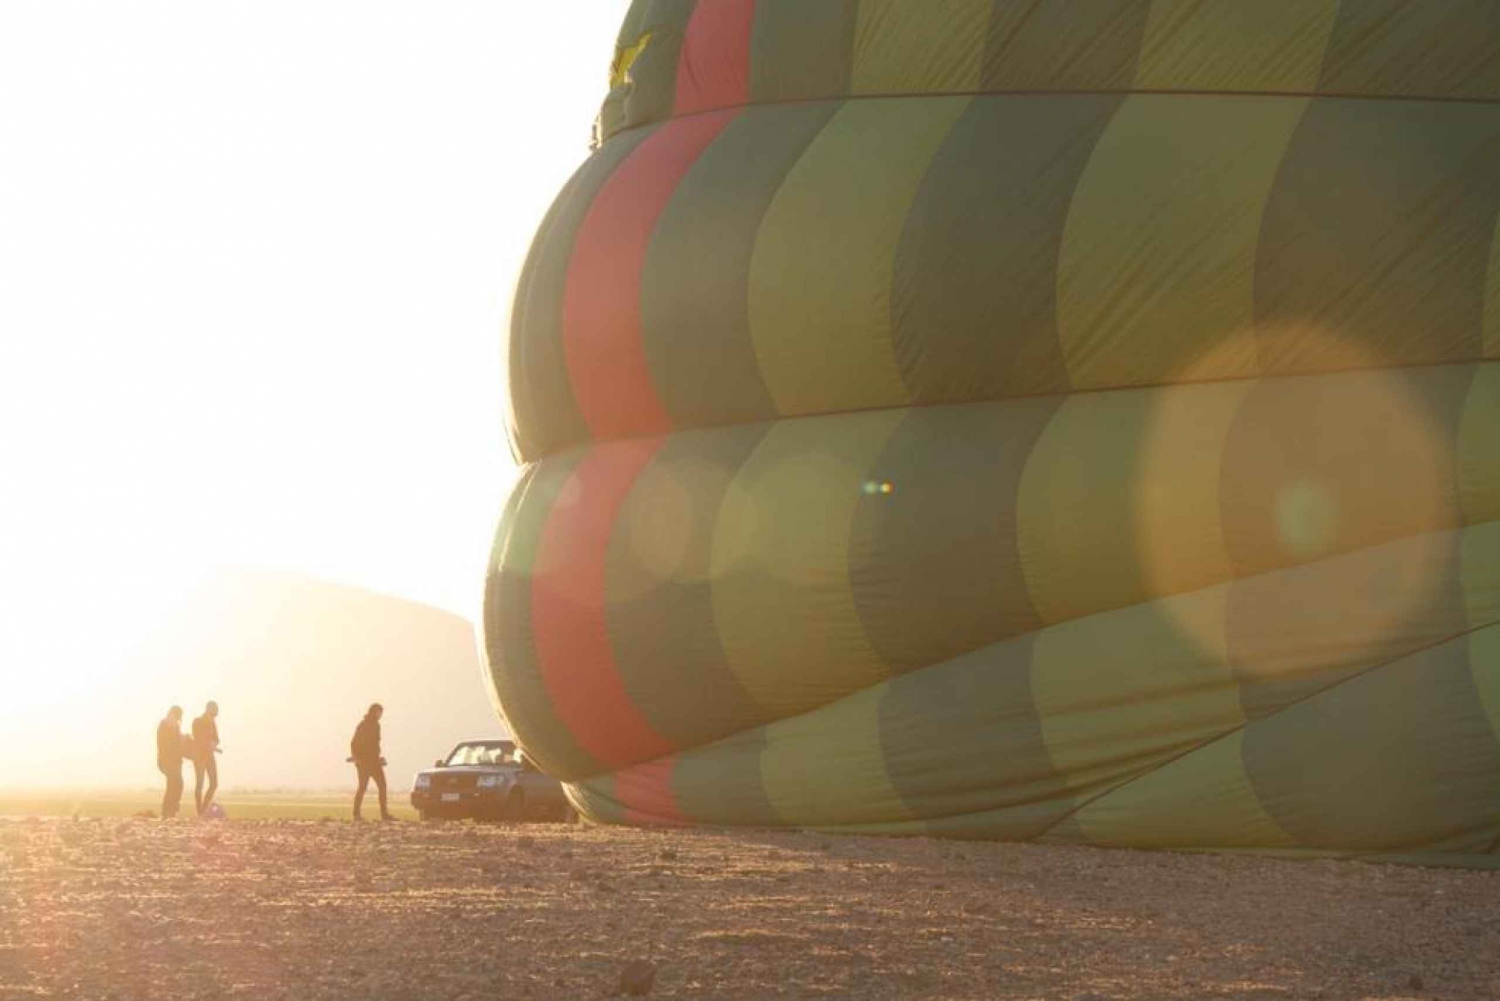 Marrakech Private Section VIP Hot Air Balloon Flight